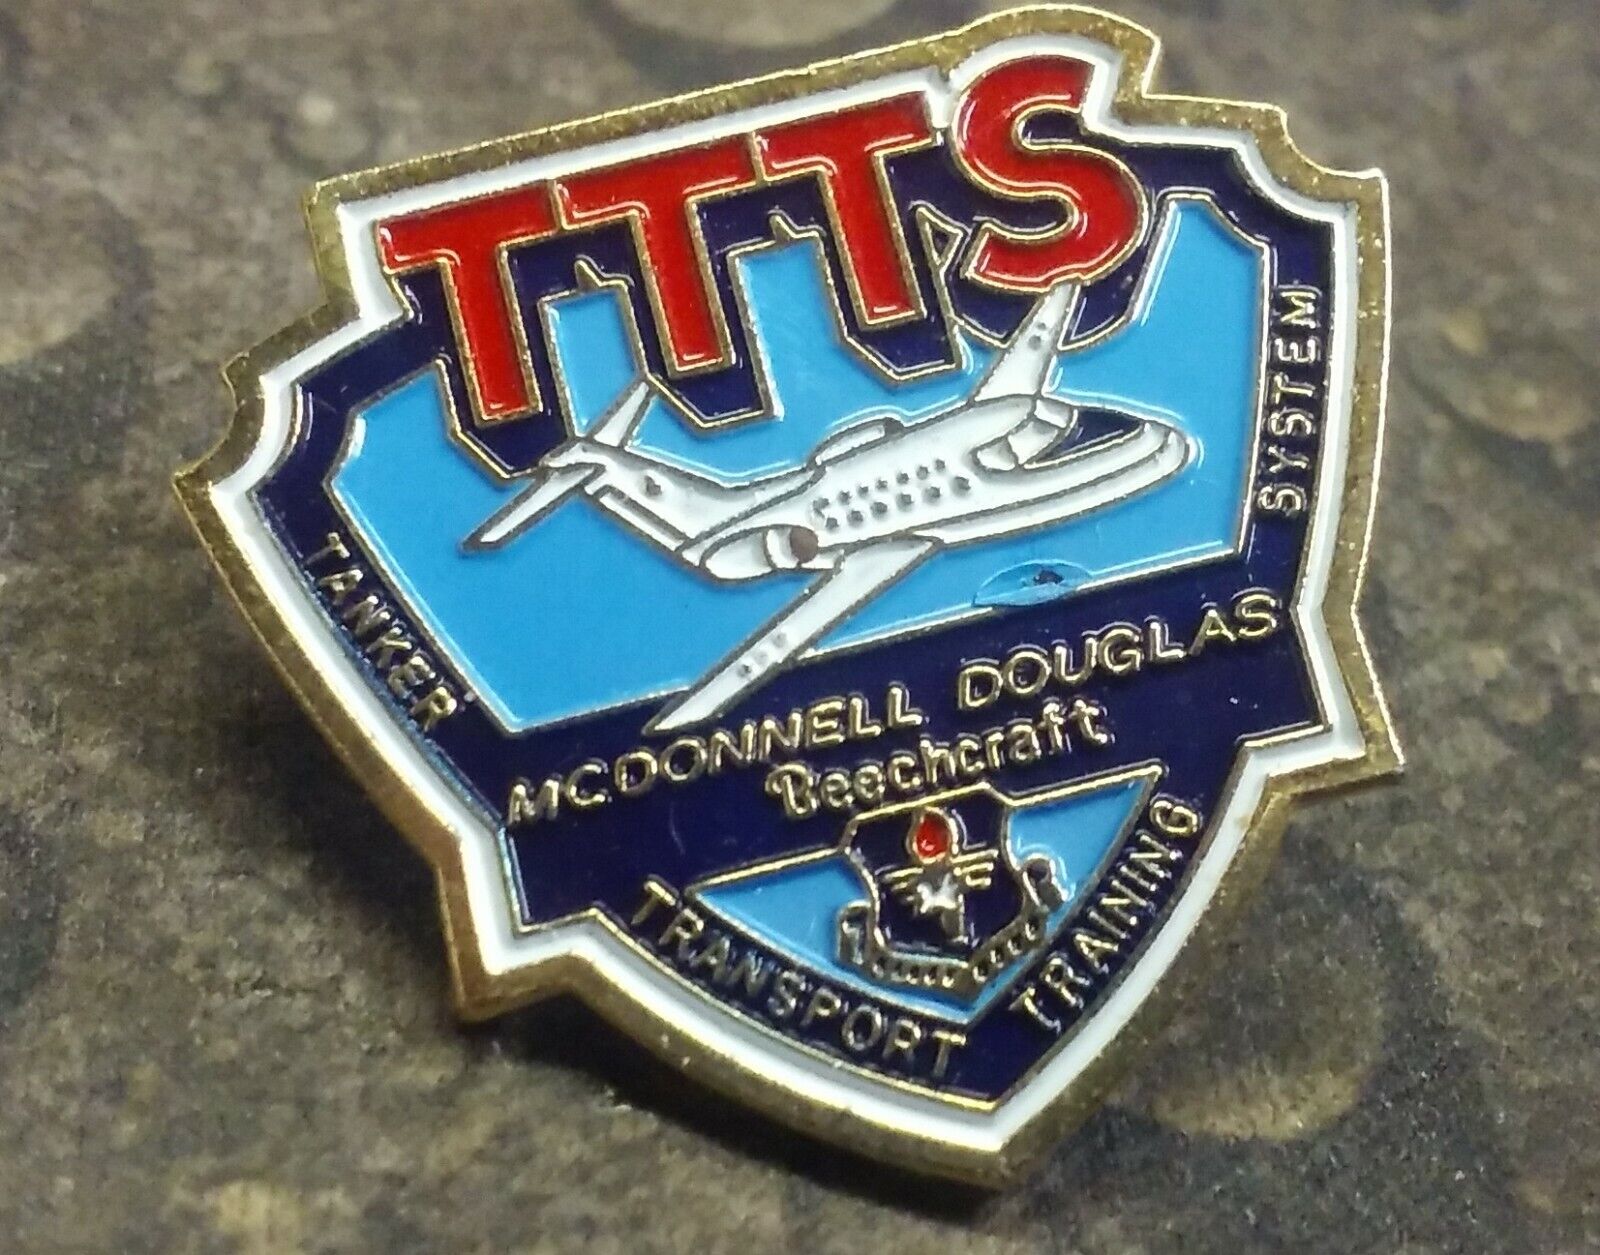 TTTS McDonnell Douglas Beechcraft vintage pin badge Tanker Transport Training